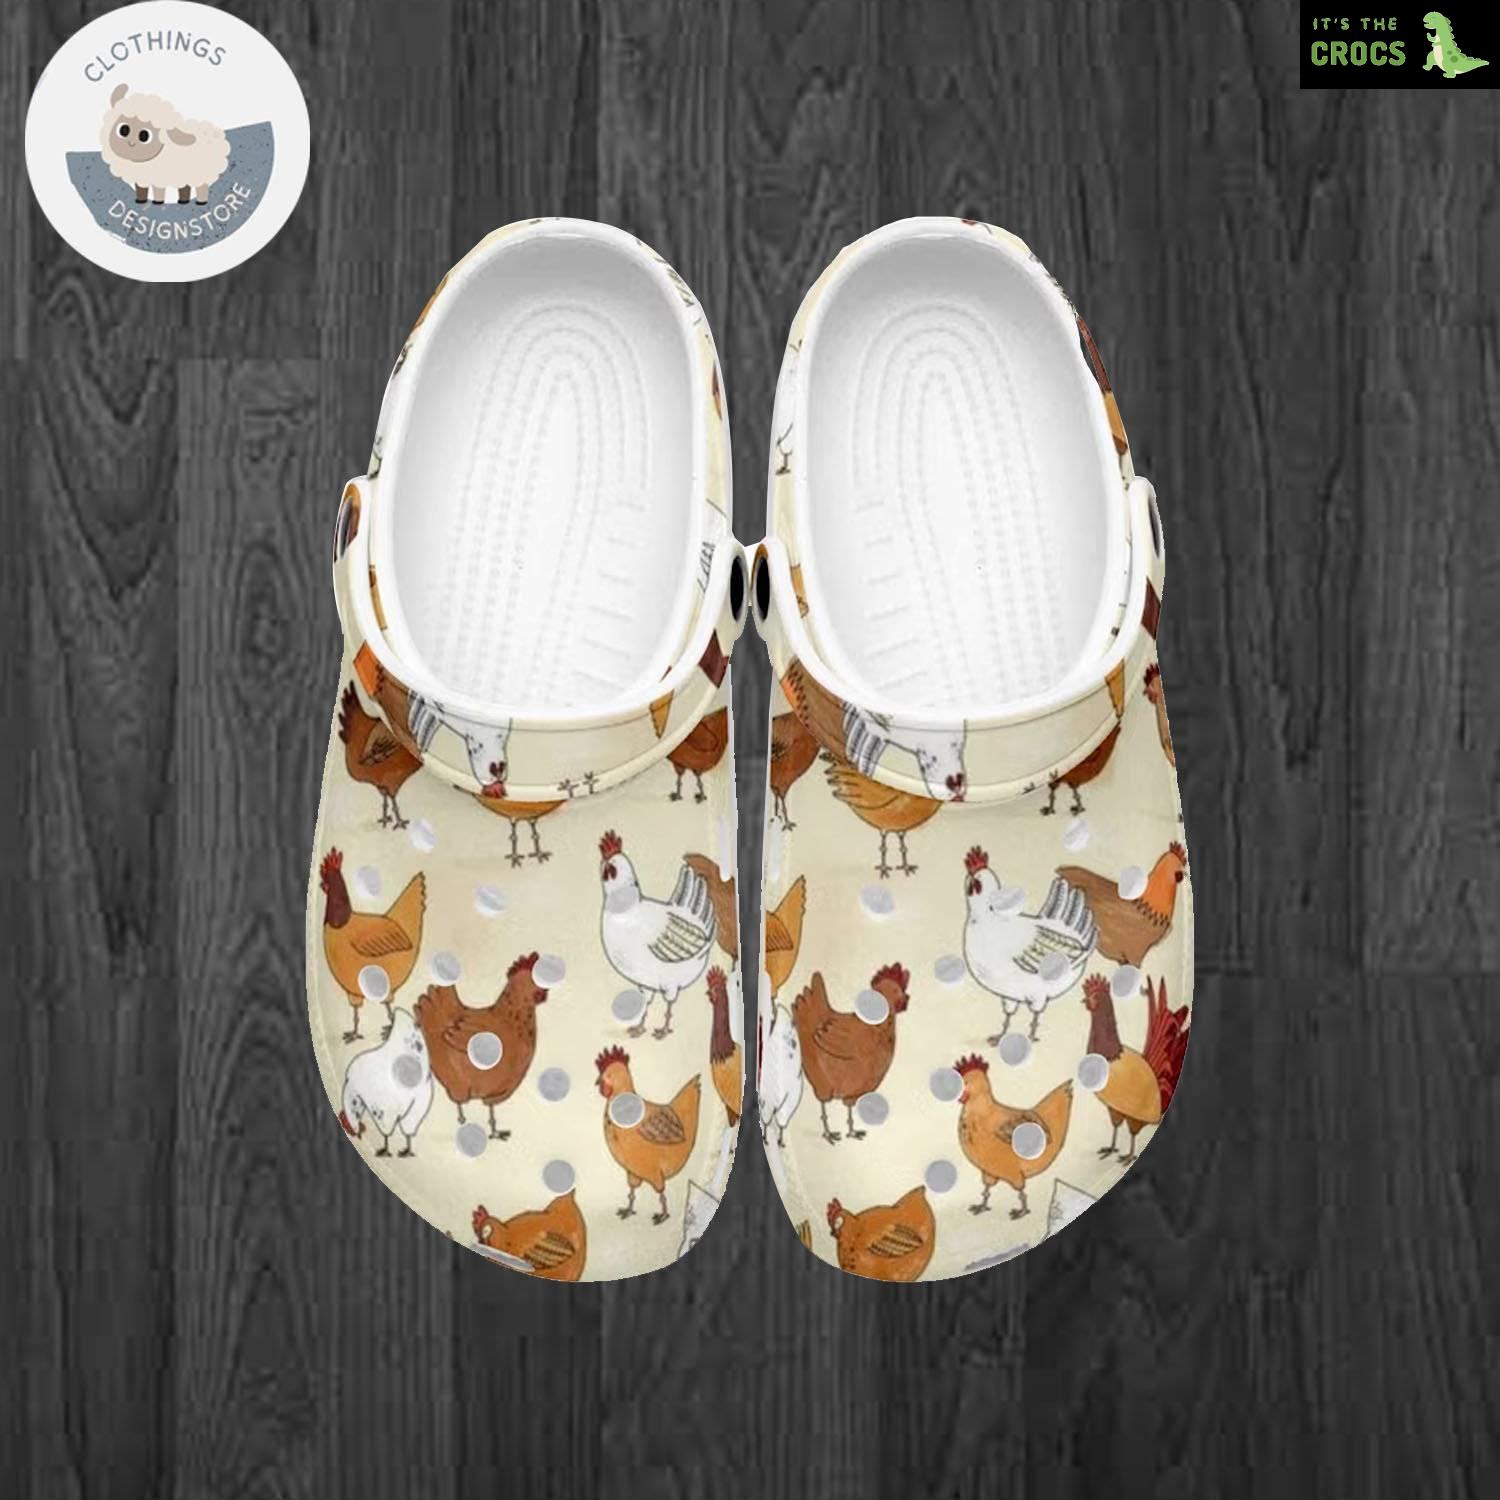 Chicken Farmer Unique Design Footwear Clog Shoes Farming Lovers Gift Idea